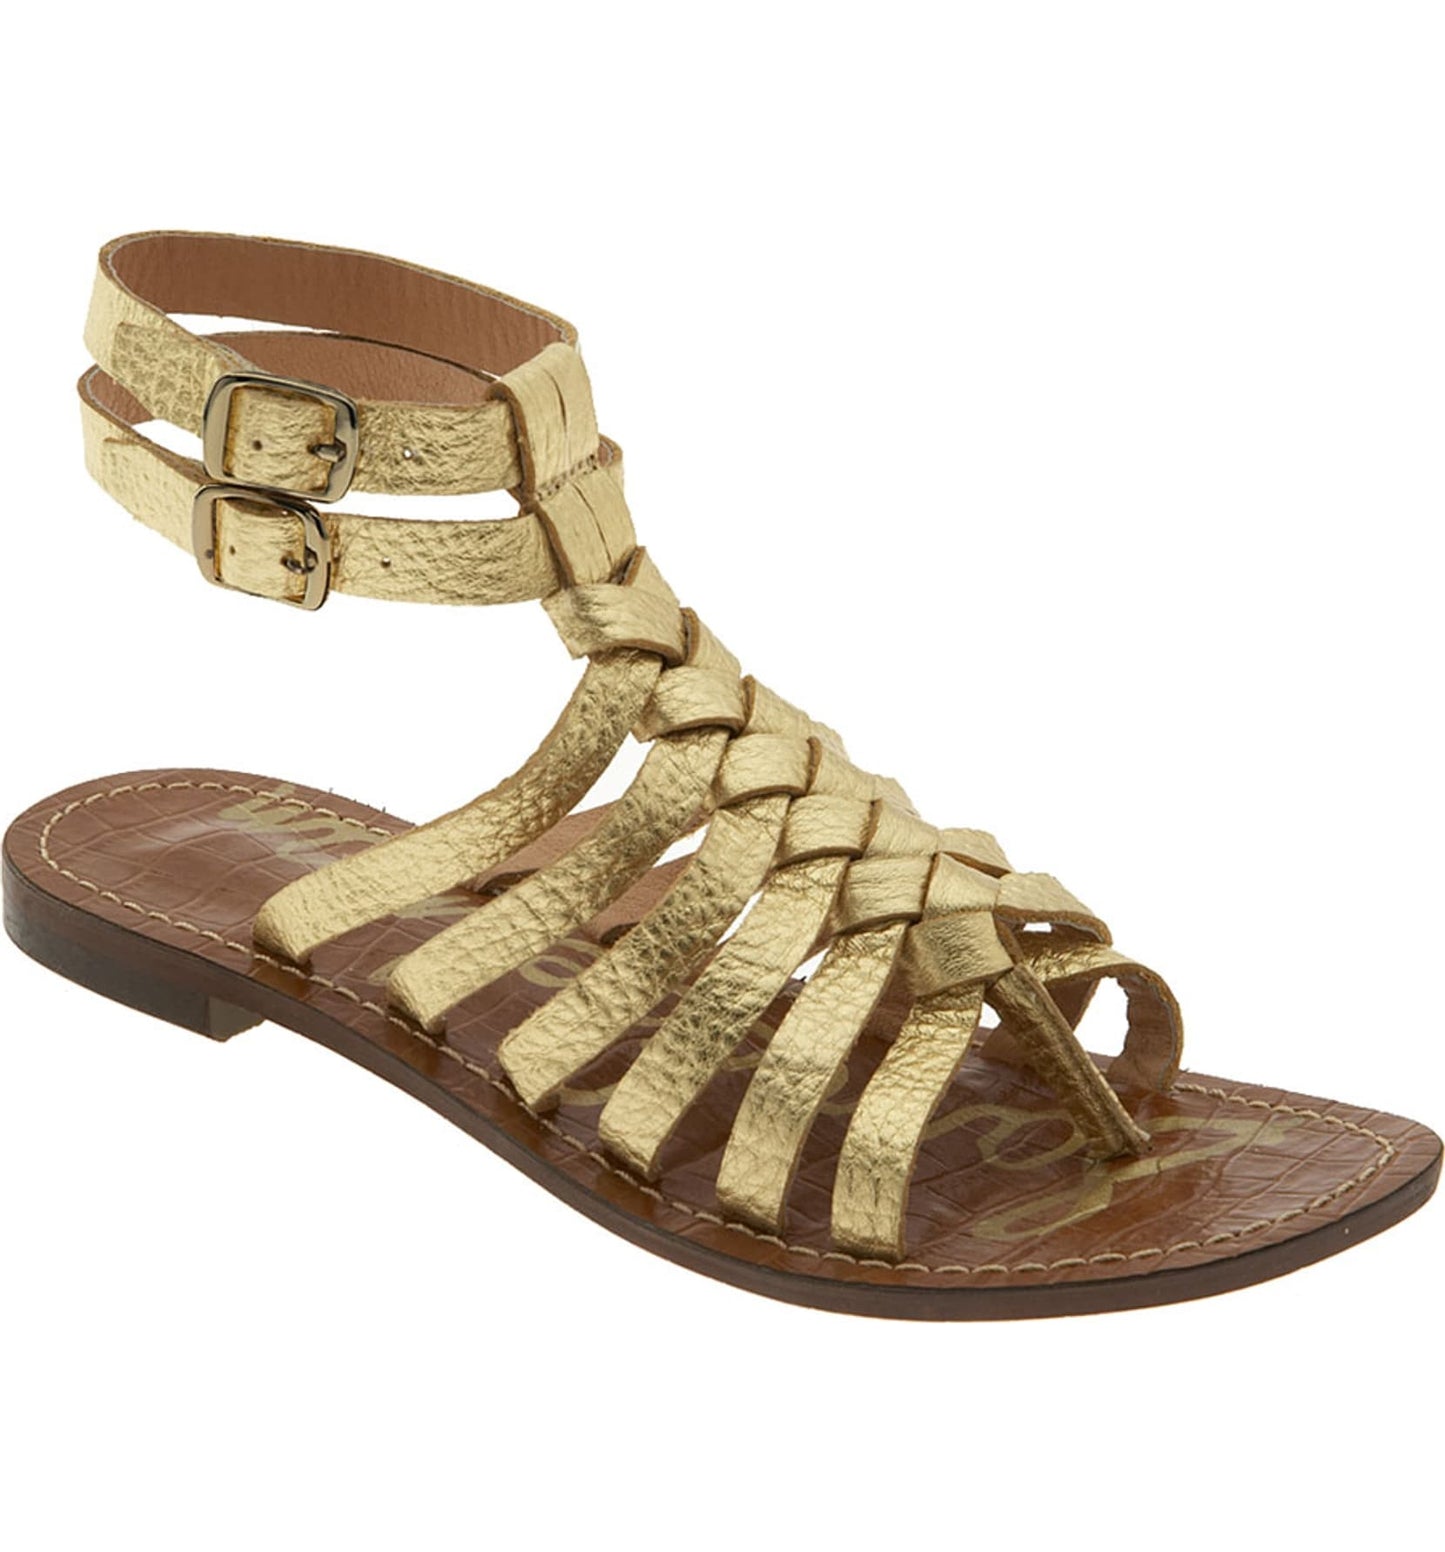 Greco Gold Leather Sam Edelman Flat Gladiator Sandal